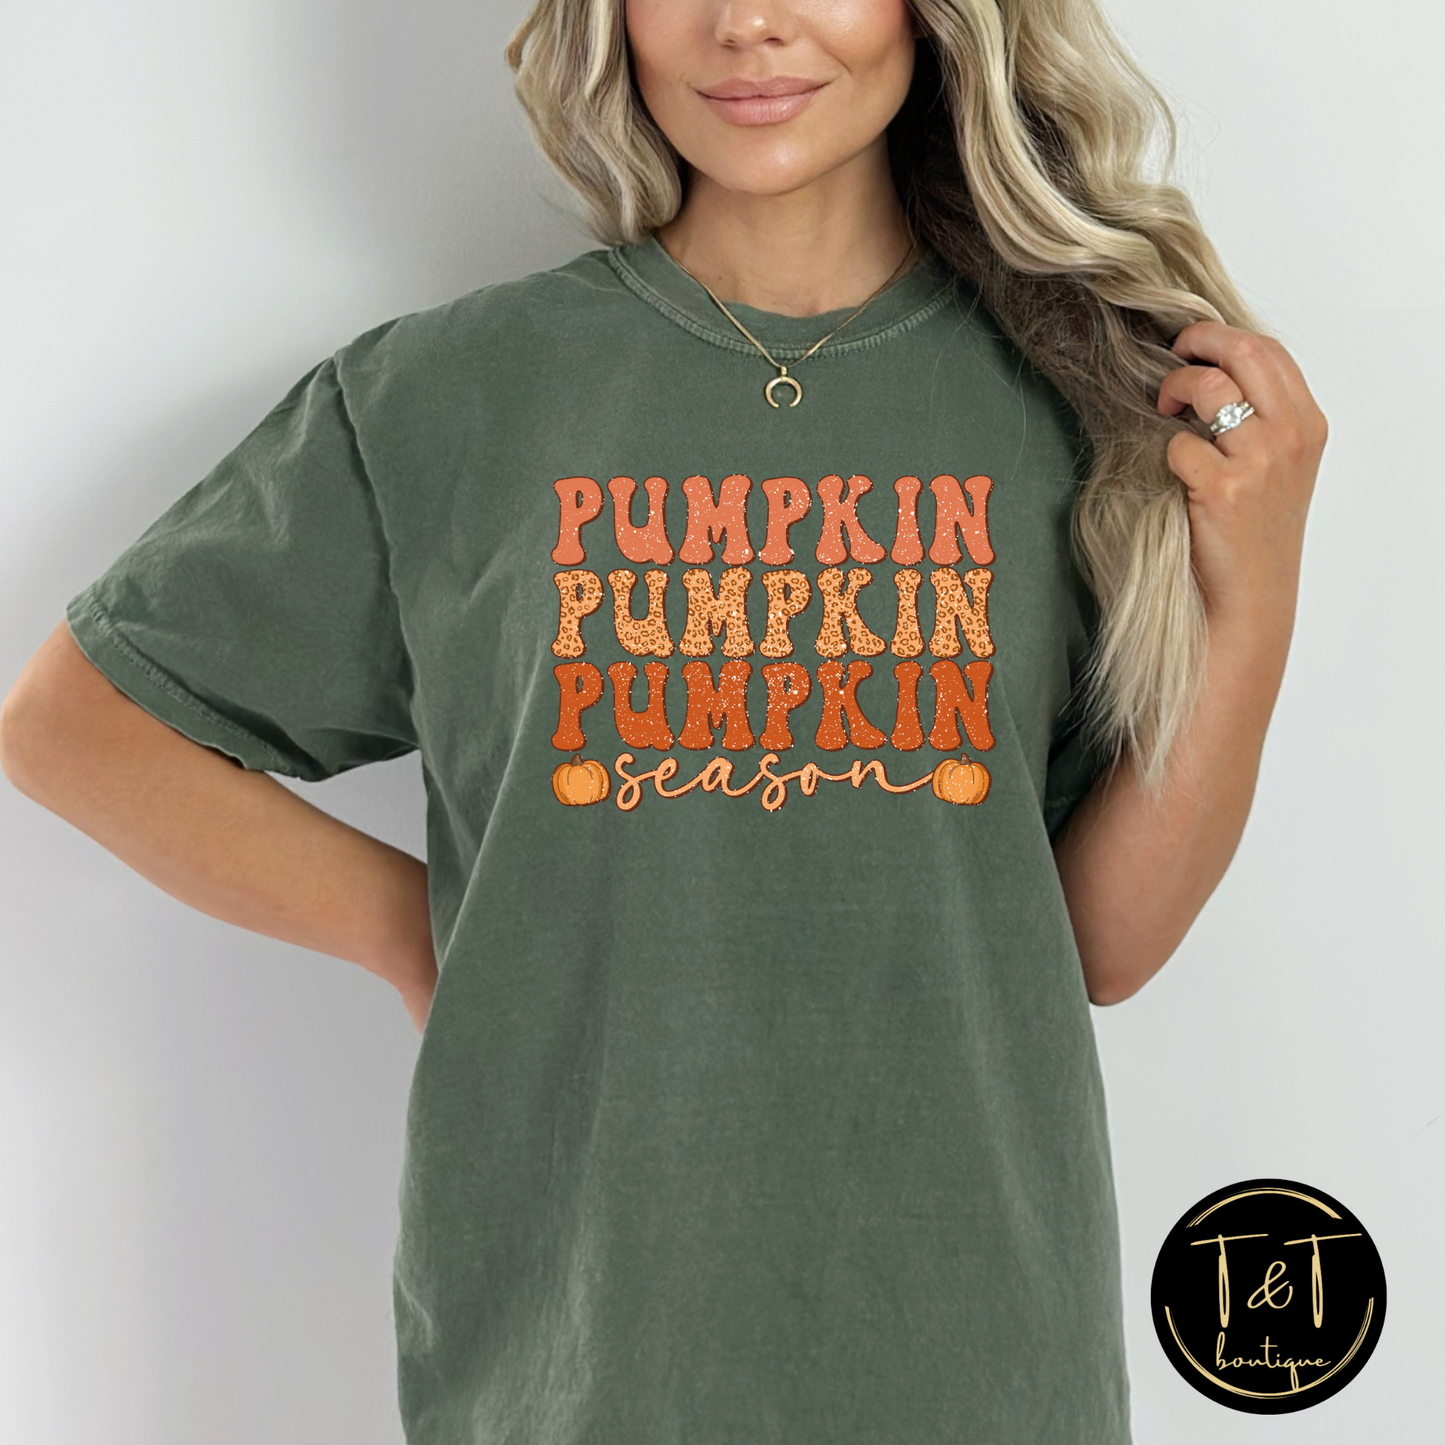 Pumpkin season tee